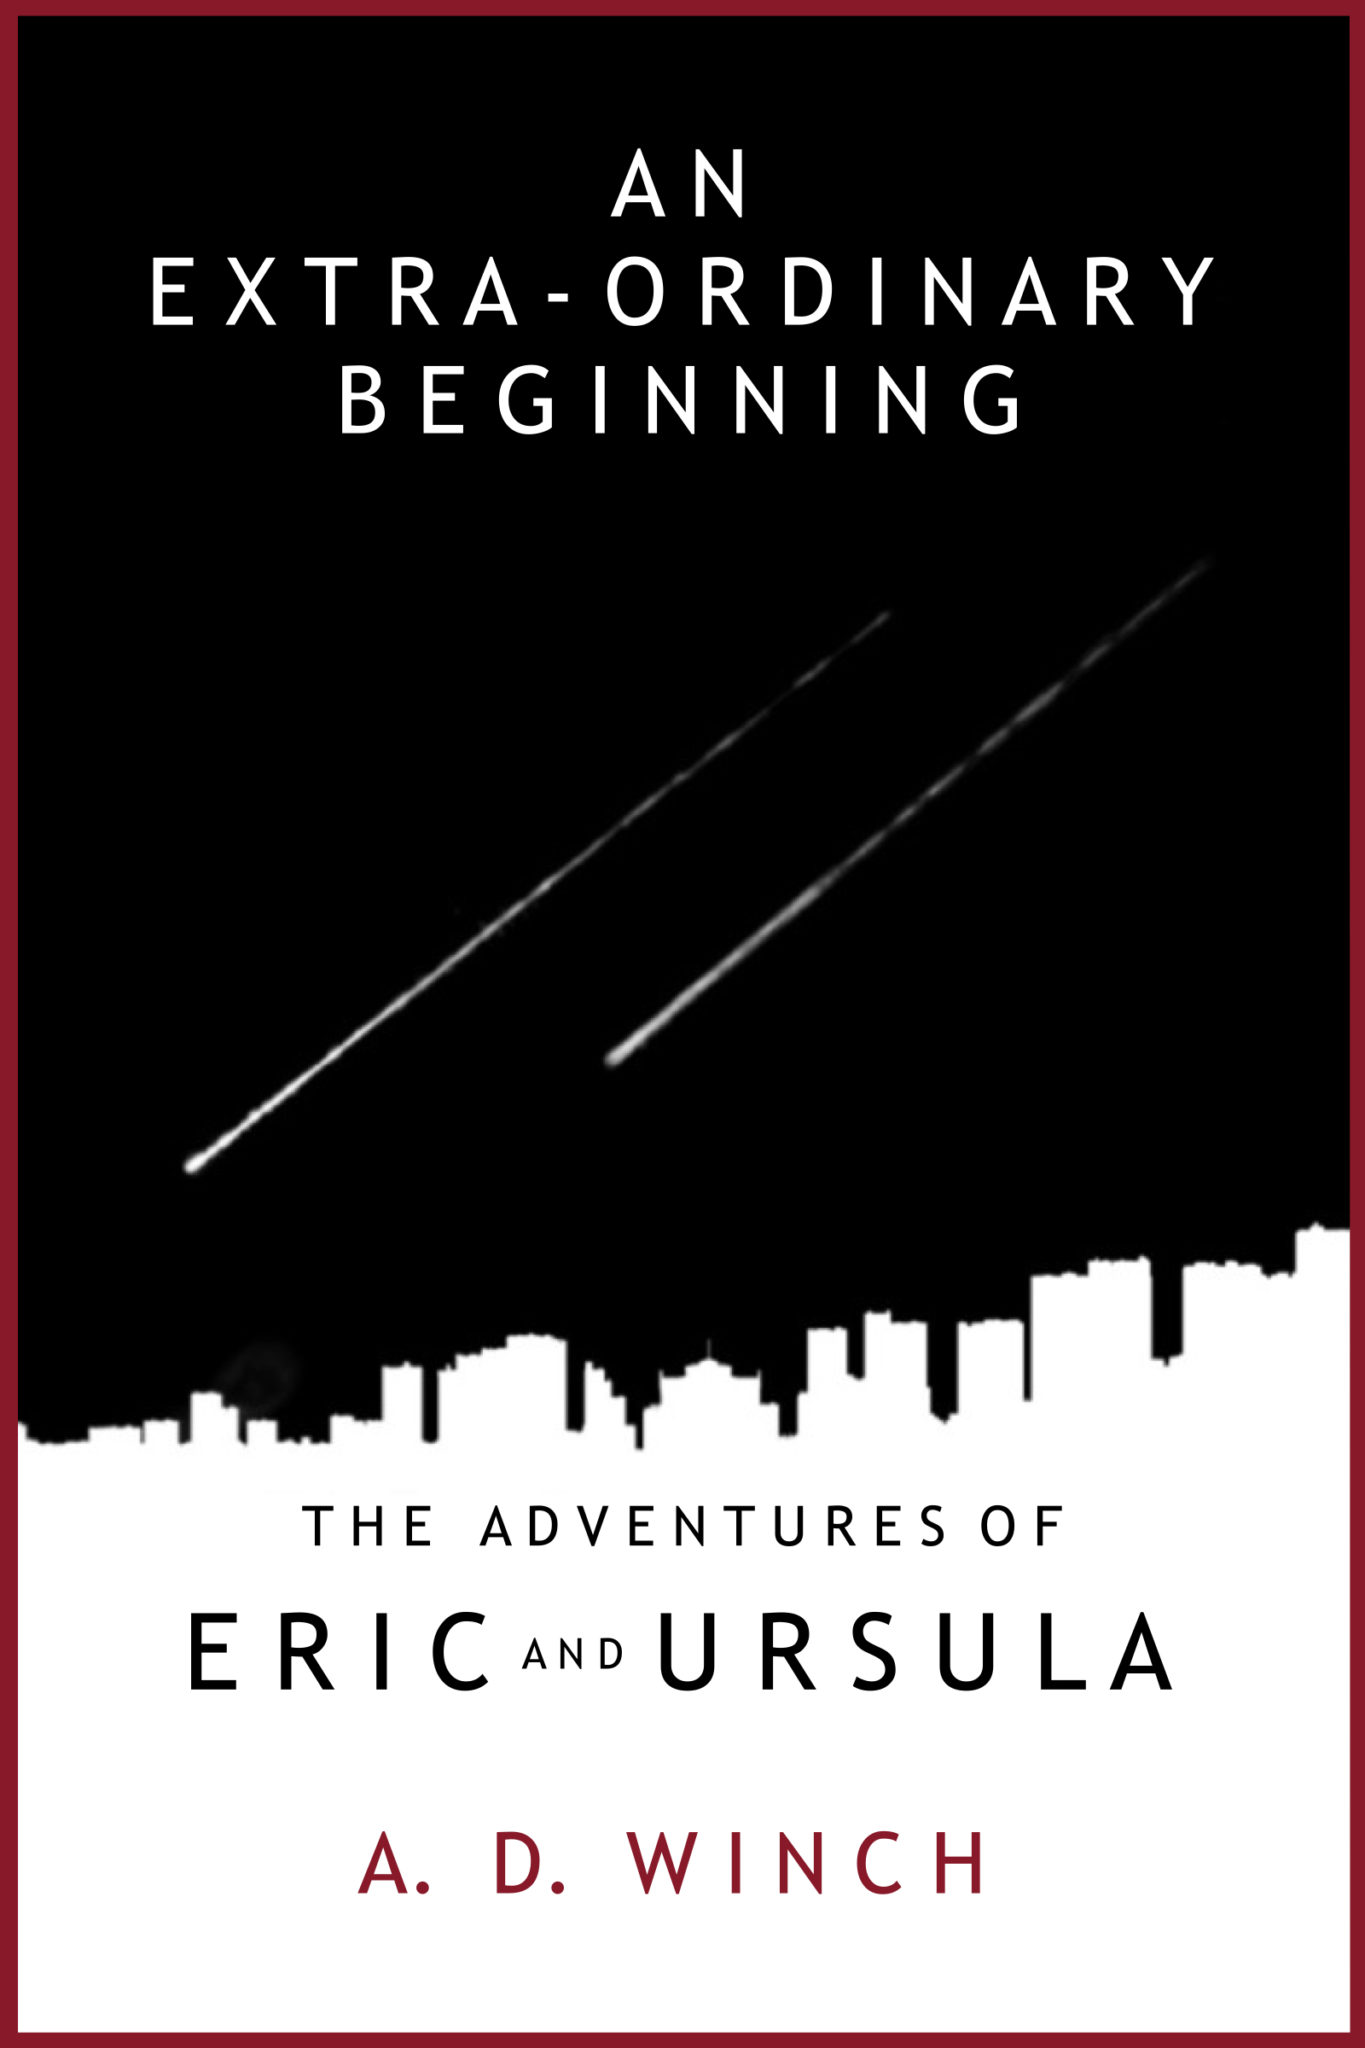 An Extra-Ordinary Beginning by A.D. Winch